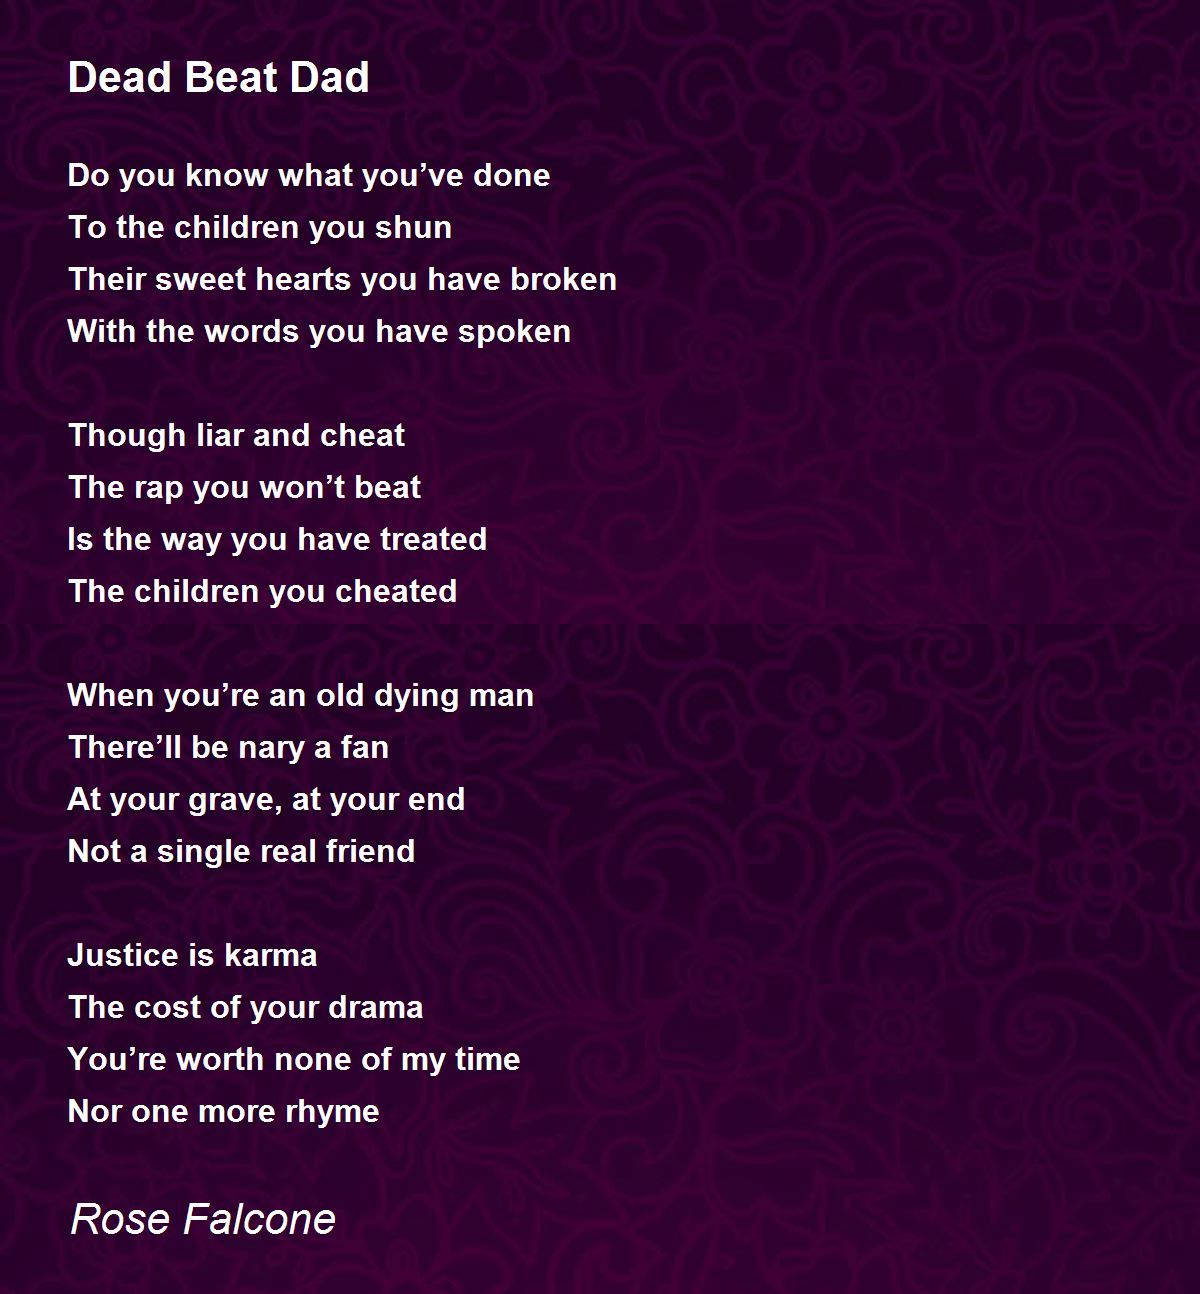 deadbeat dad poems